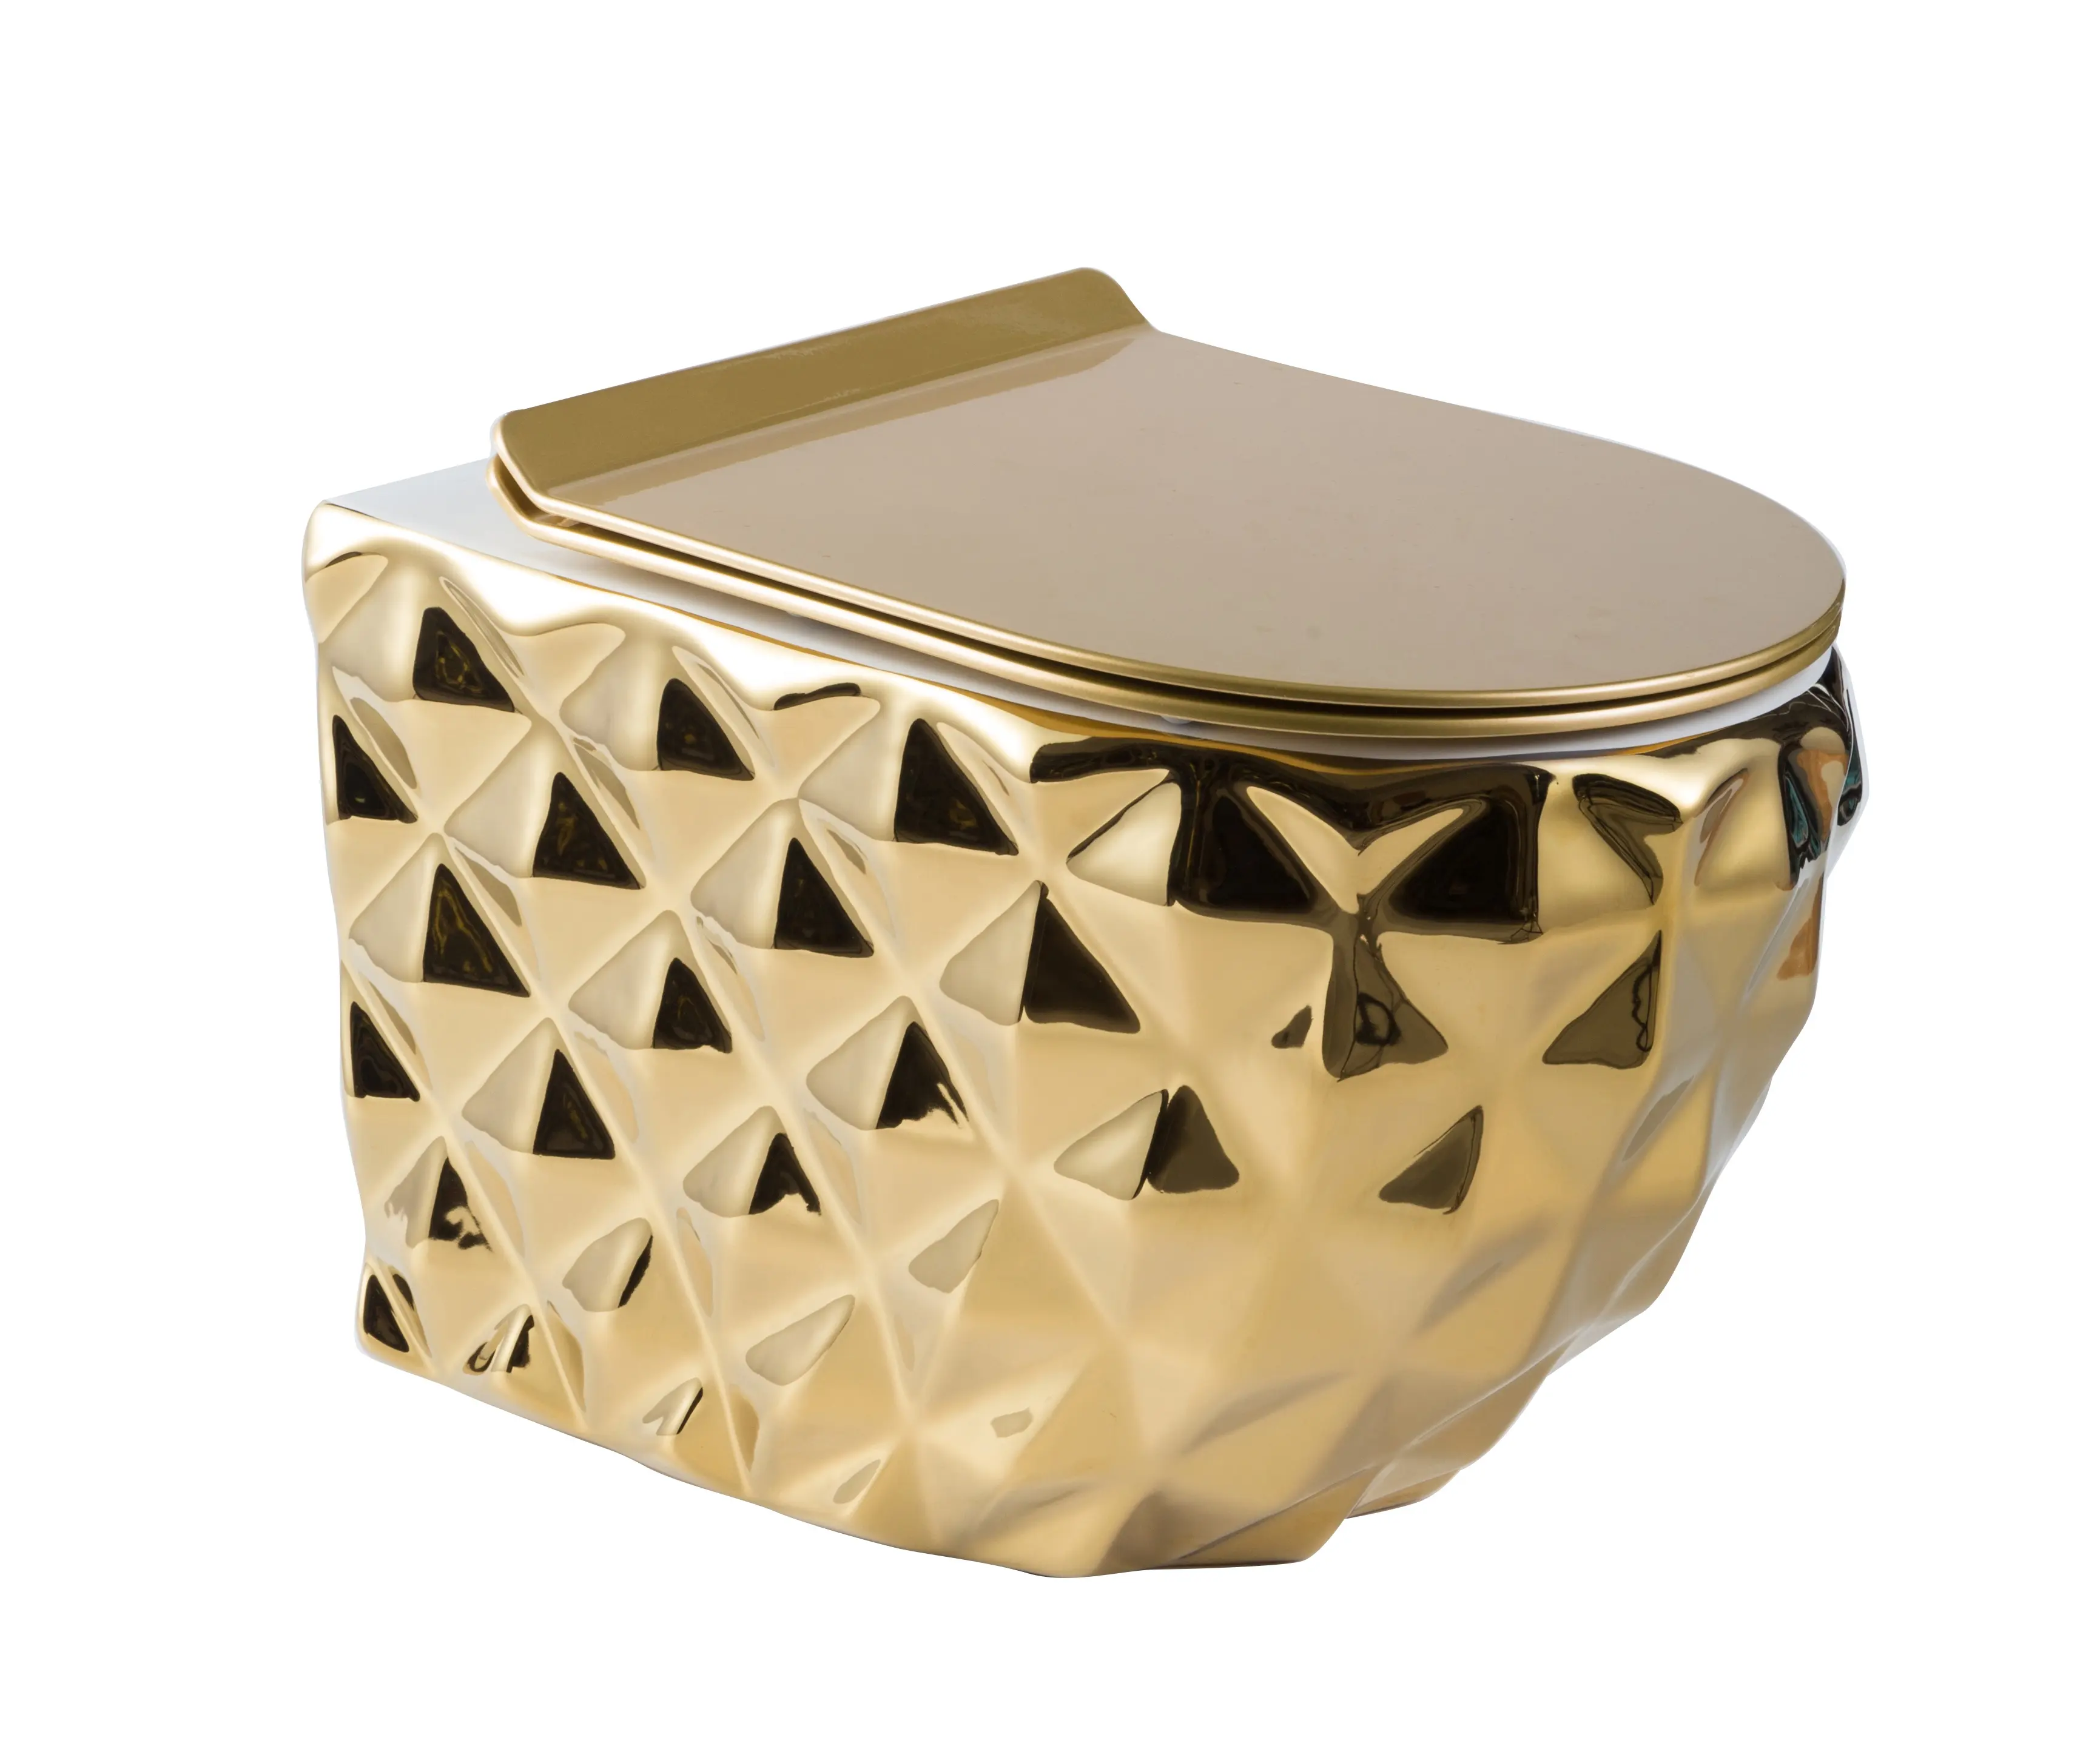 Luxus Gold Sanitär keramik Wassers chrank Siphonic Flush Einteilige Toilette WC Keramik Toilette Boden montage Bad Toiletten schüssel Set